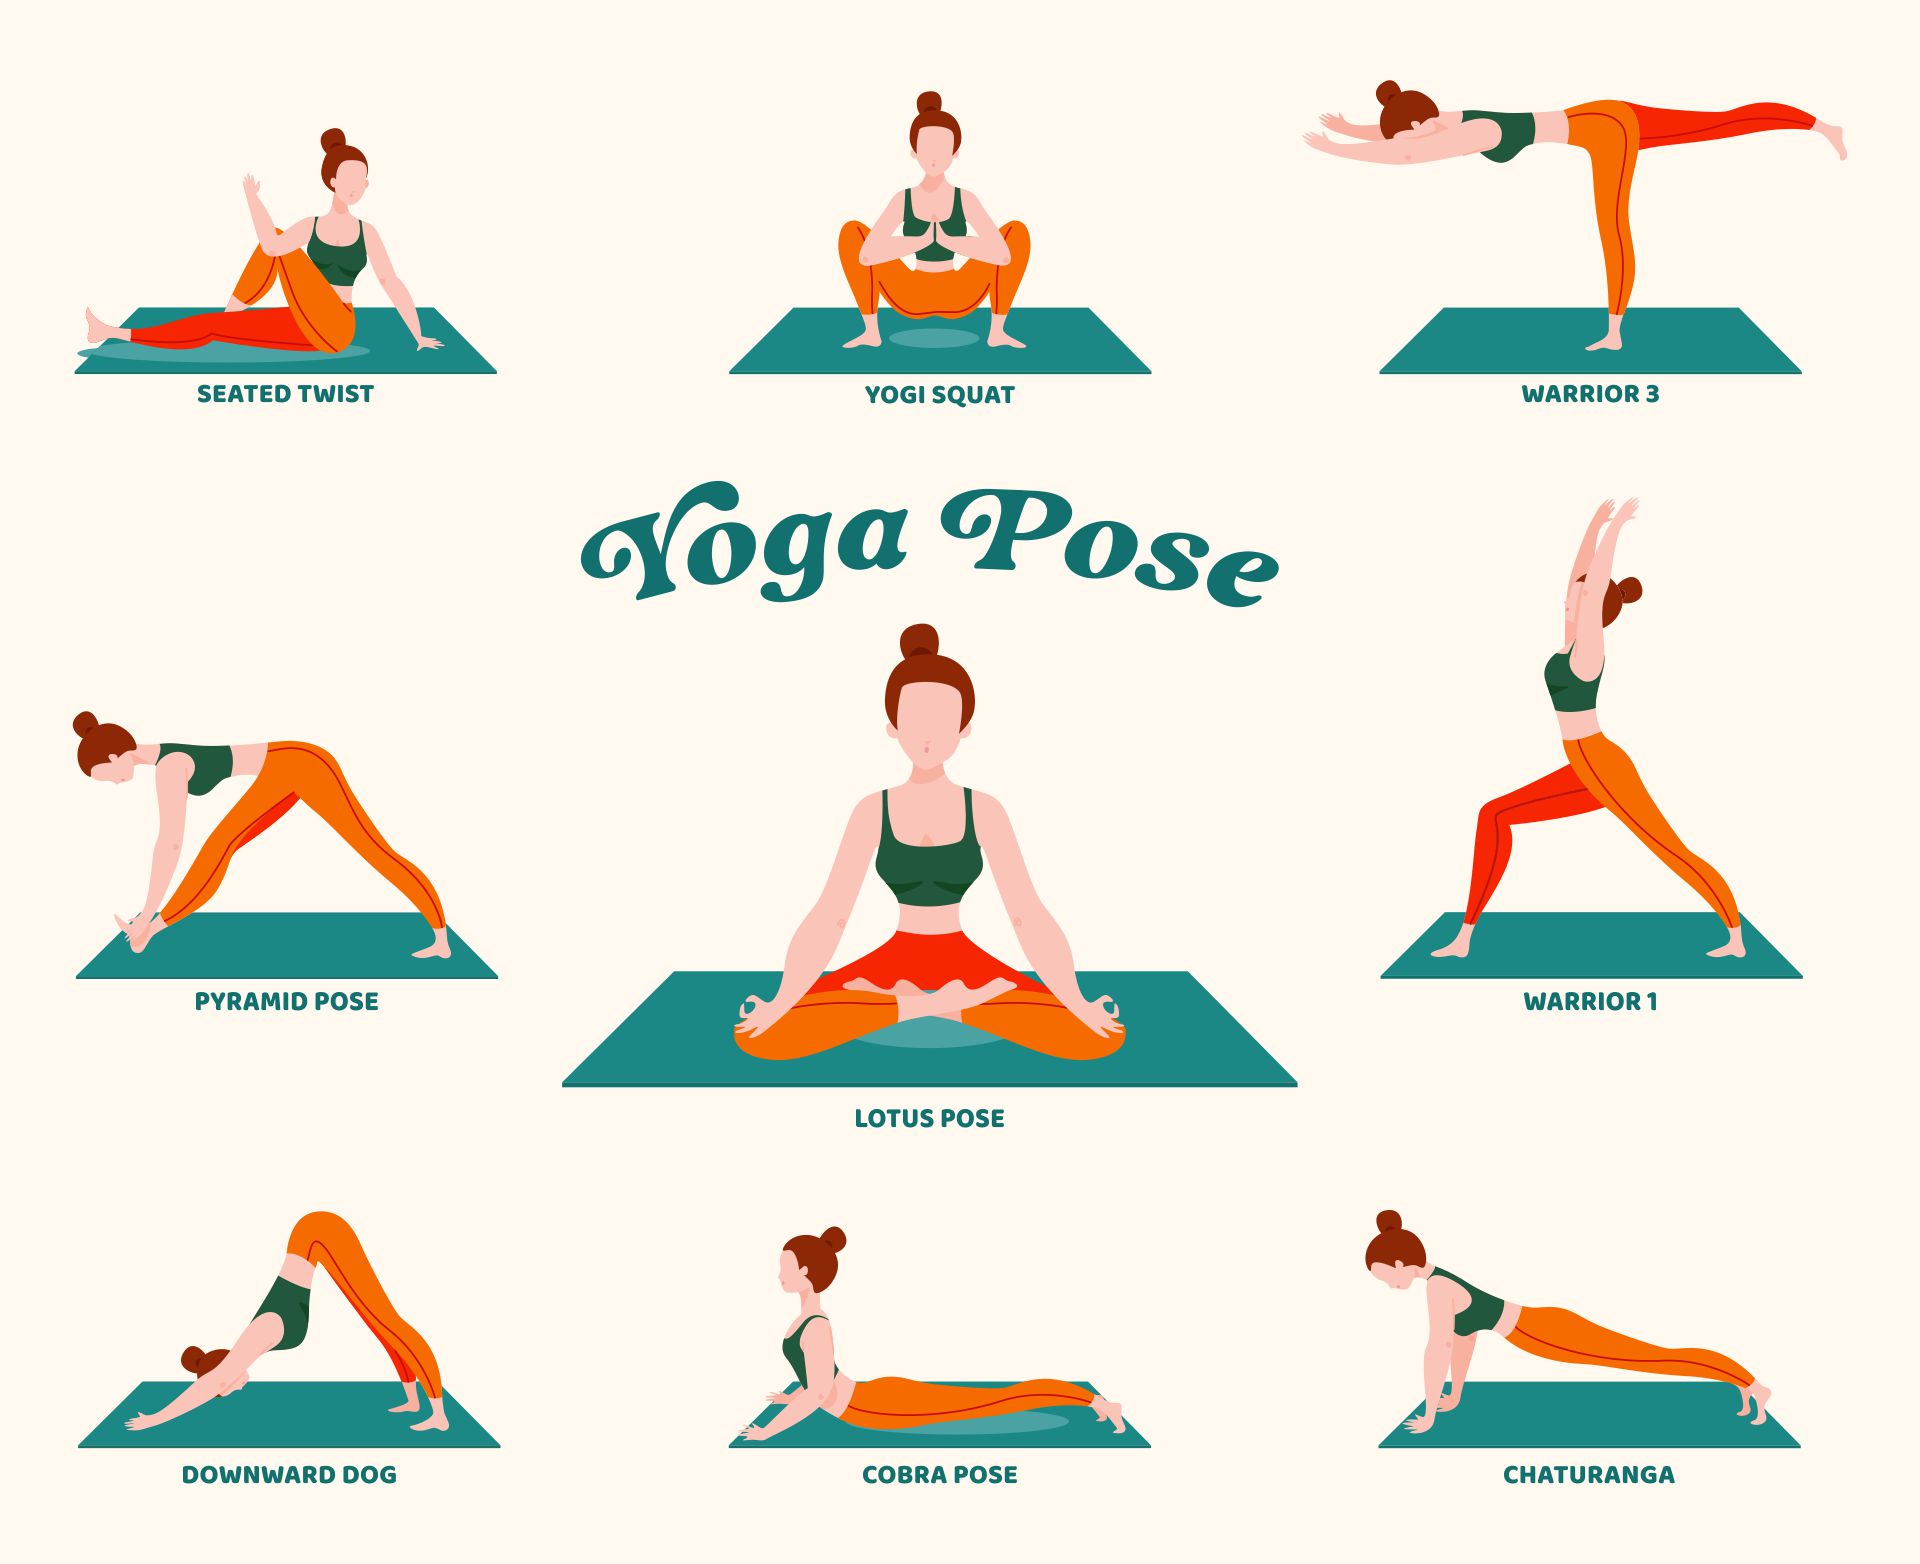 Basic Yoga Poses for Beginners Printable